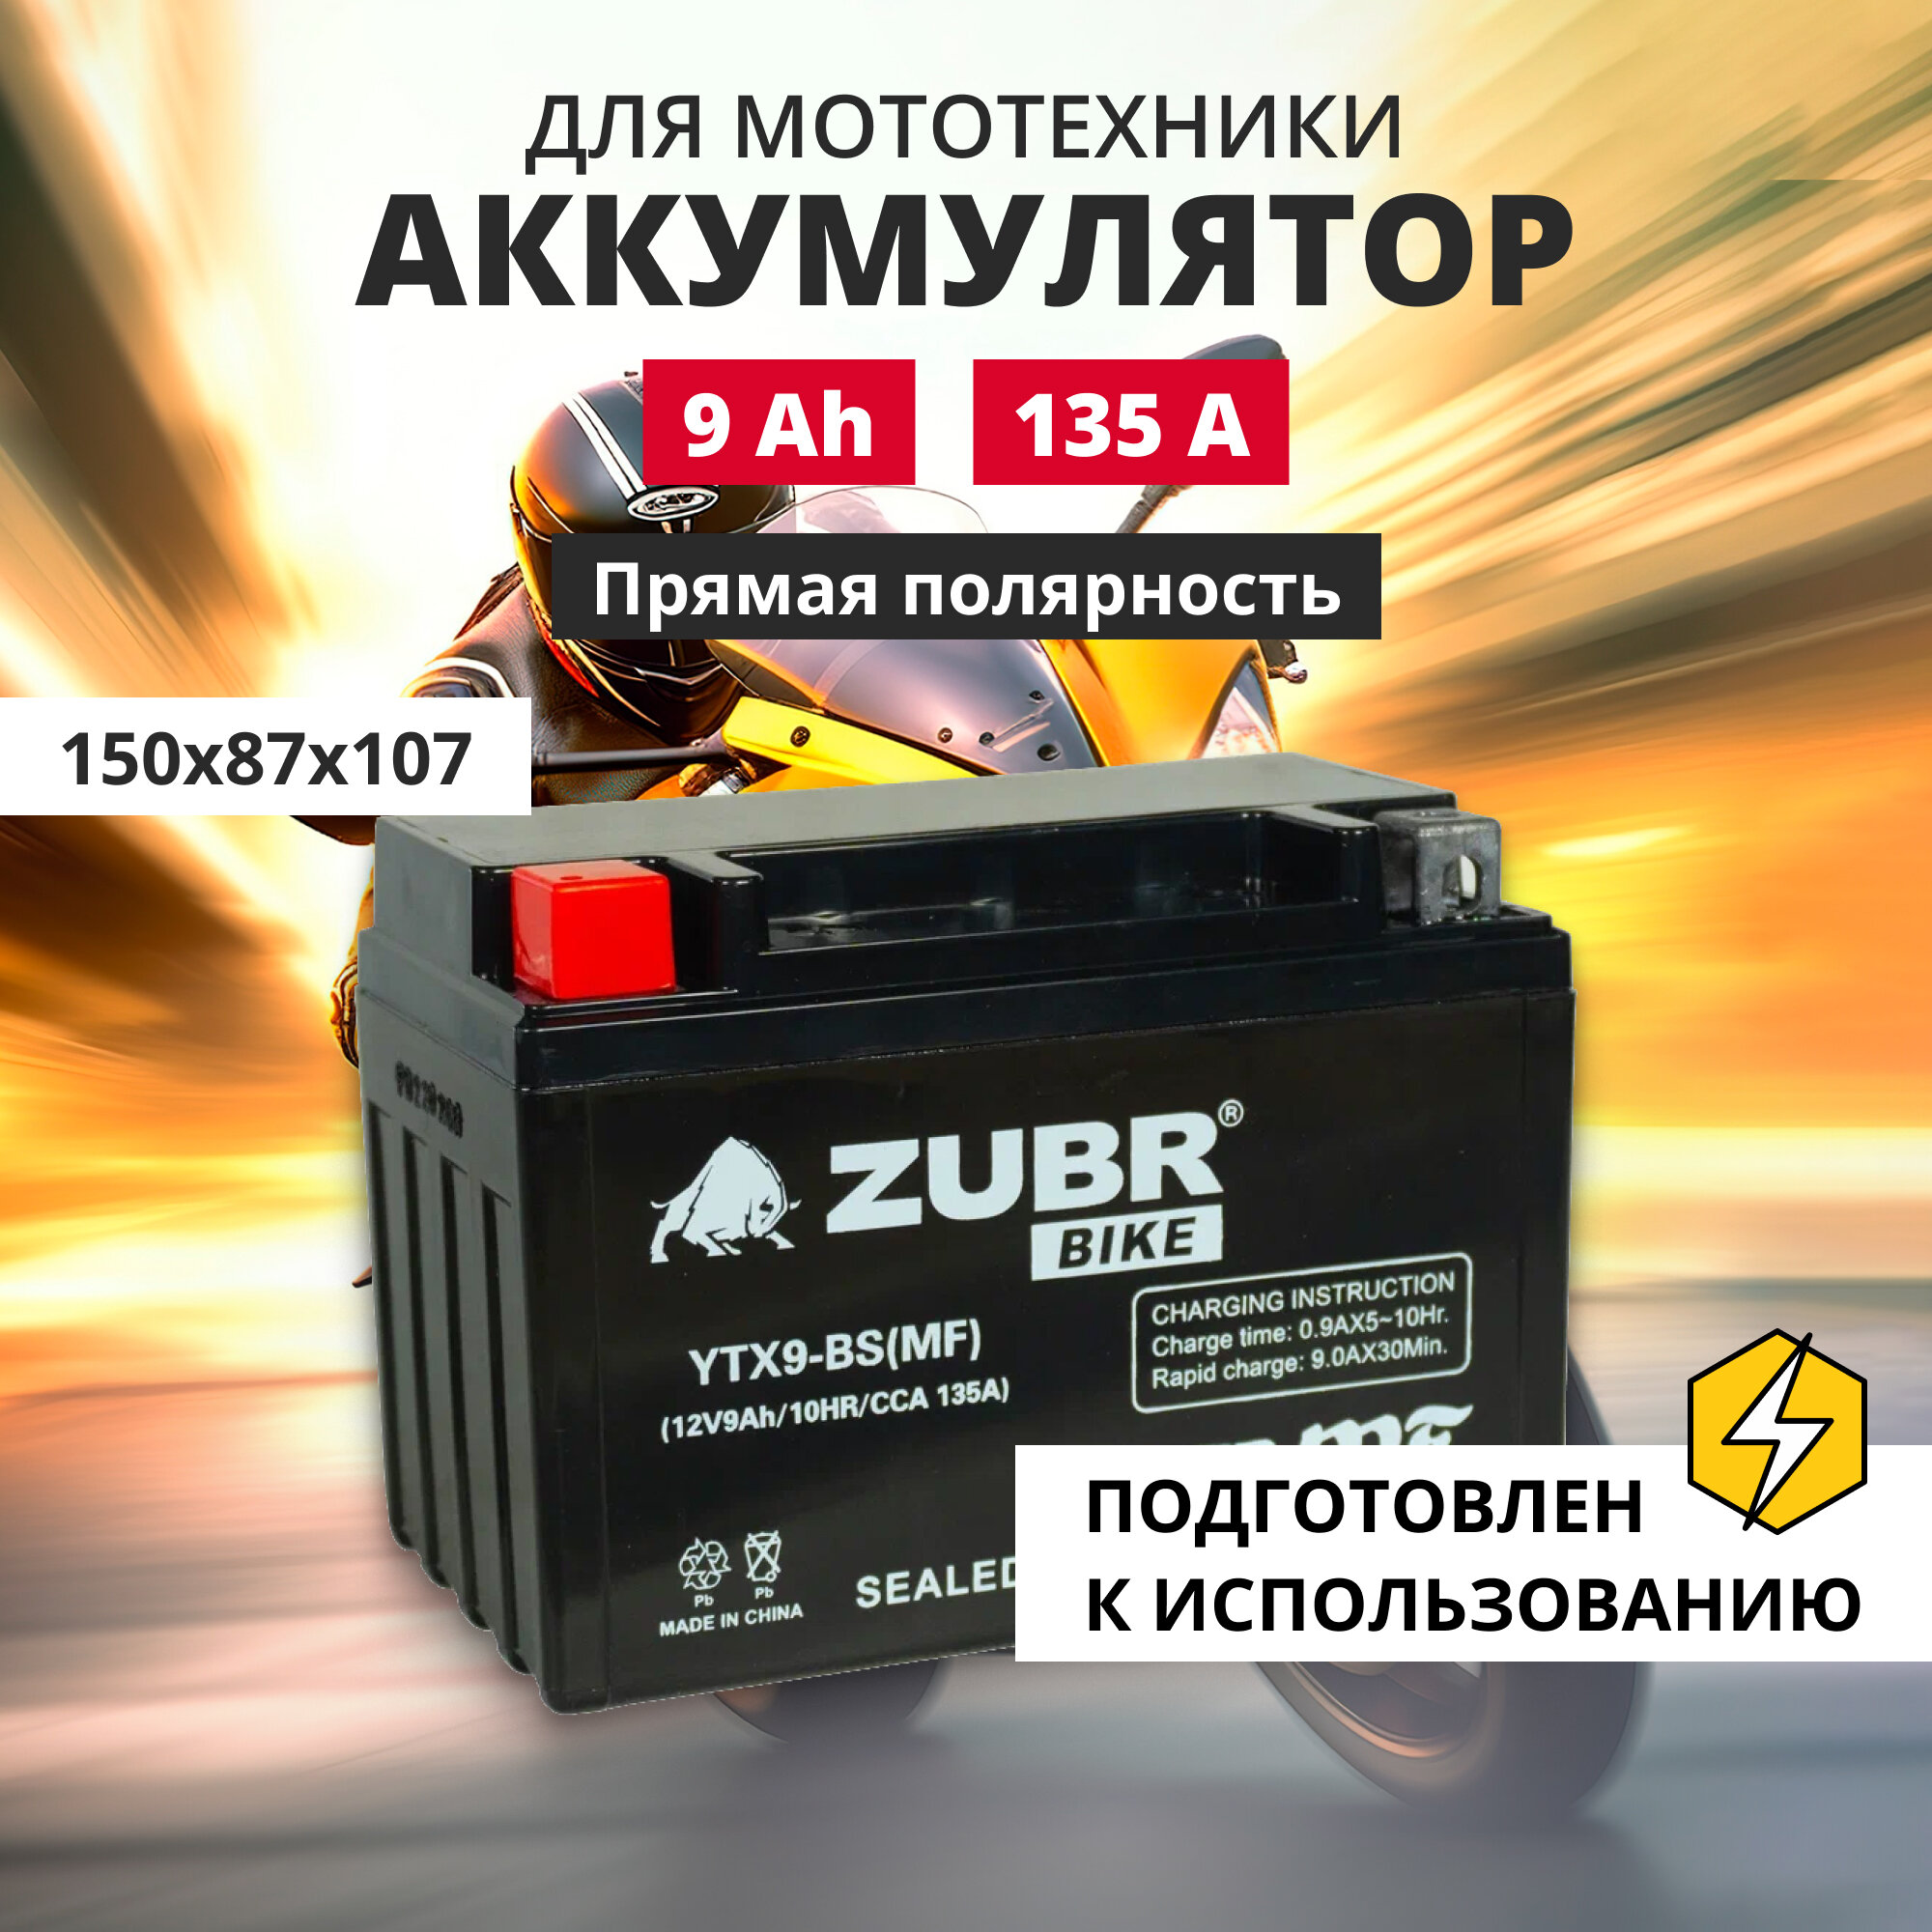 Аккумулятор для мотоцикла 12v ZUBR YTX9-BS(MF) прямая полярность 9 Ah 135 A AGM, акб на скутер, мопед, квадроцикл 150x87x107 мм